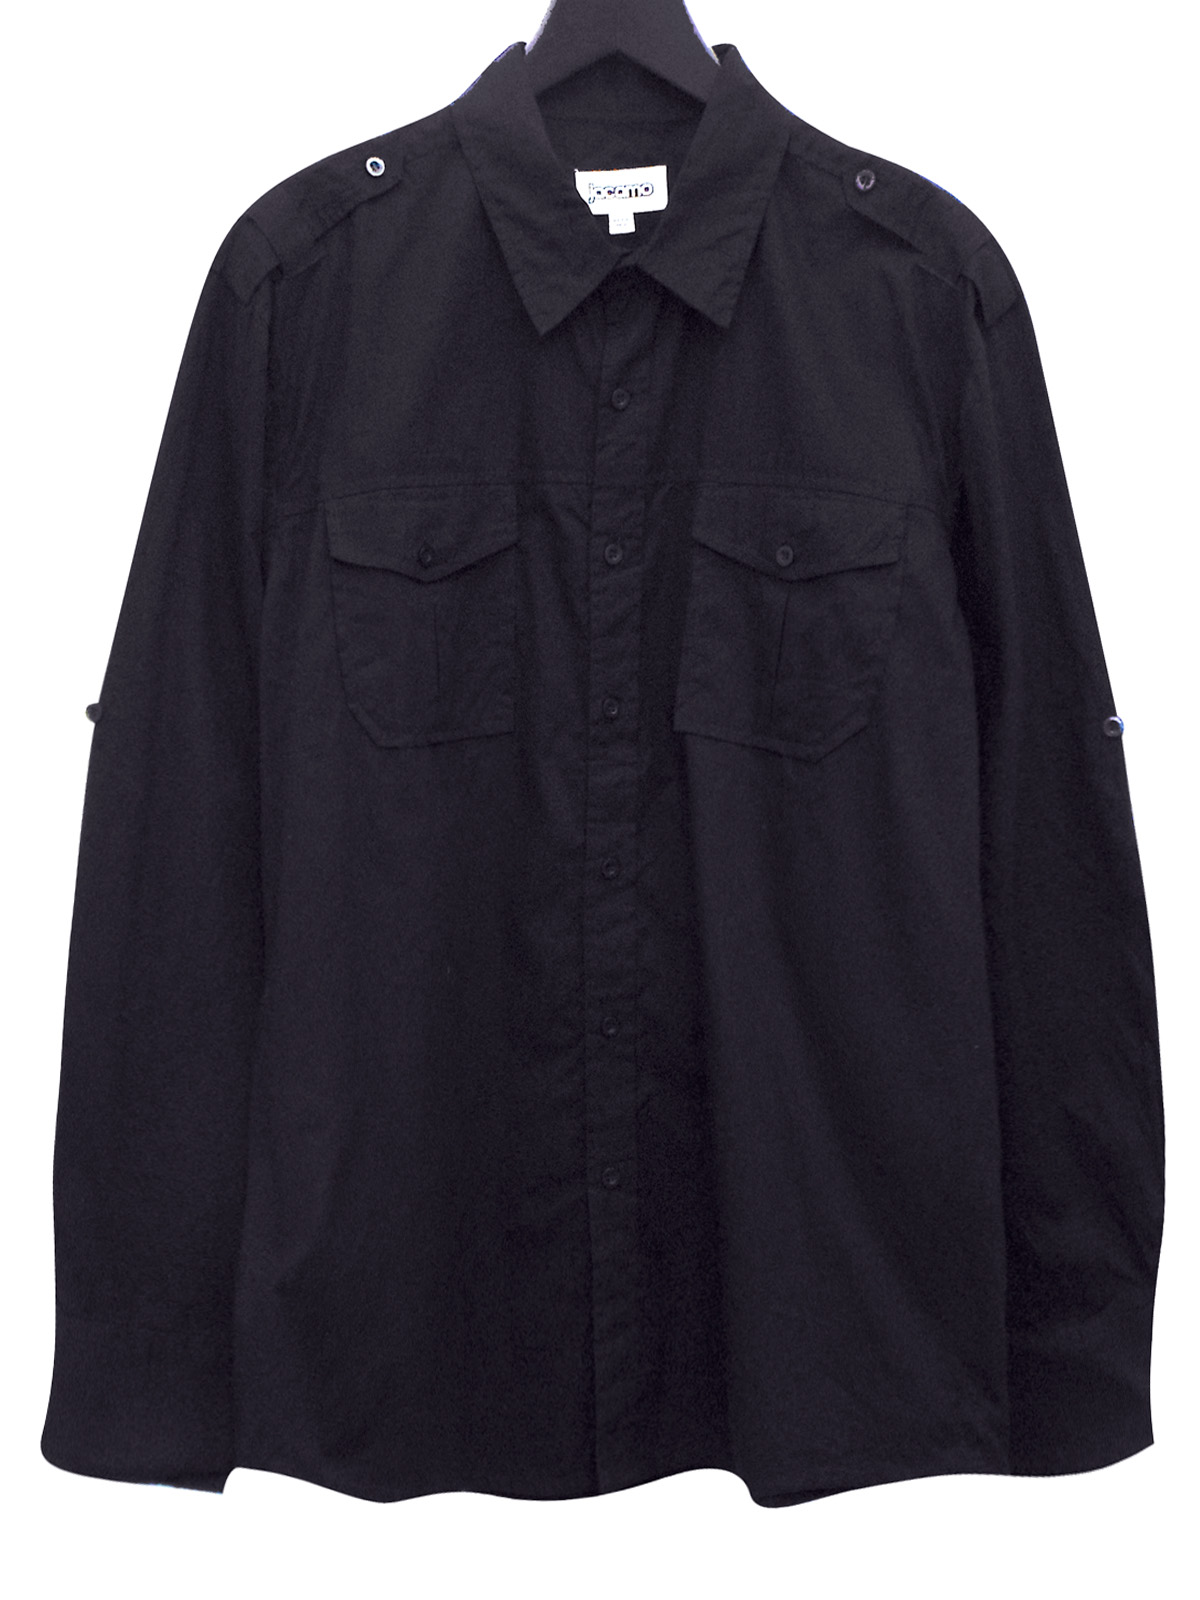 Jacamo - - Jacamo Mens BLACK Pure Cotton Military Shirt - Size XL to 5XL